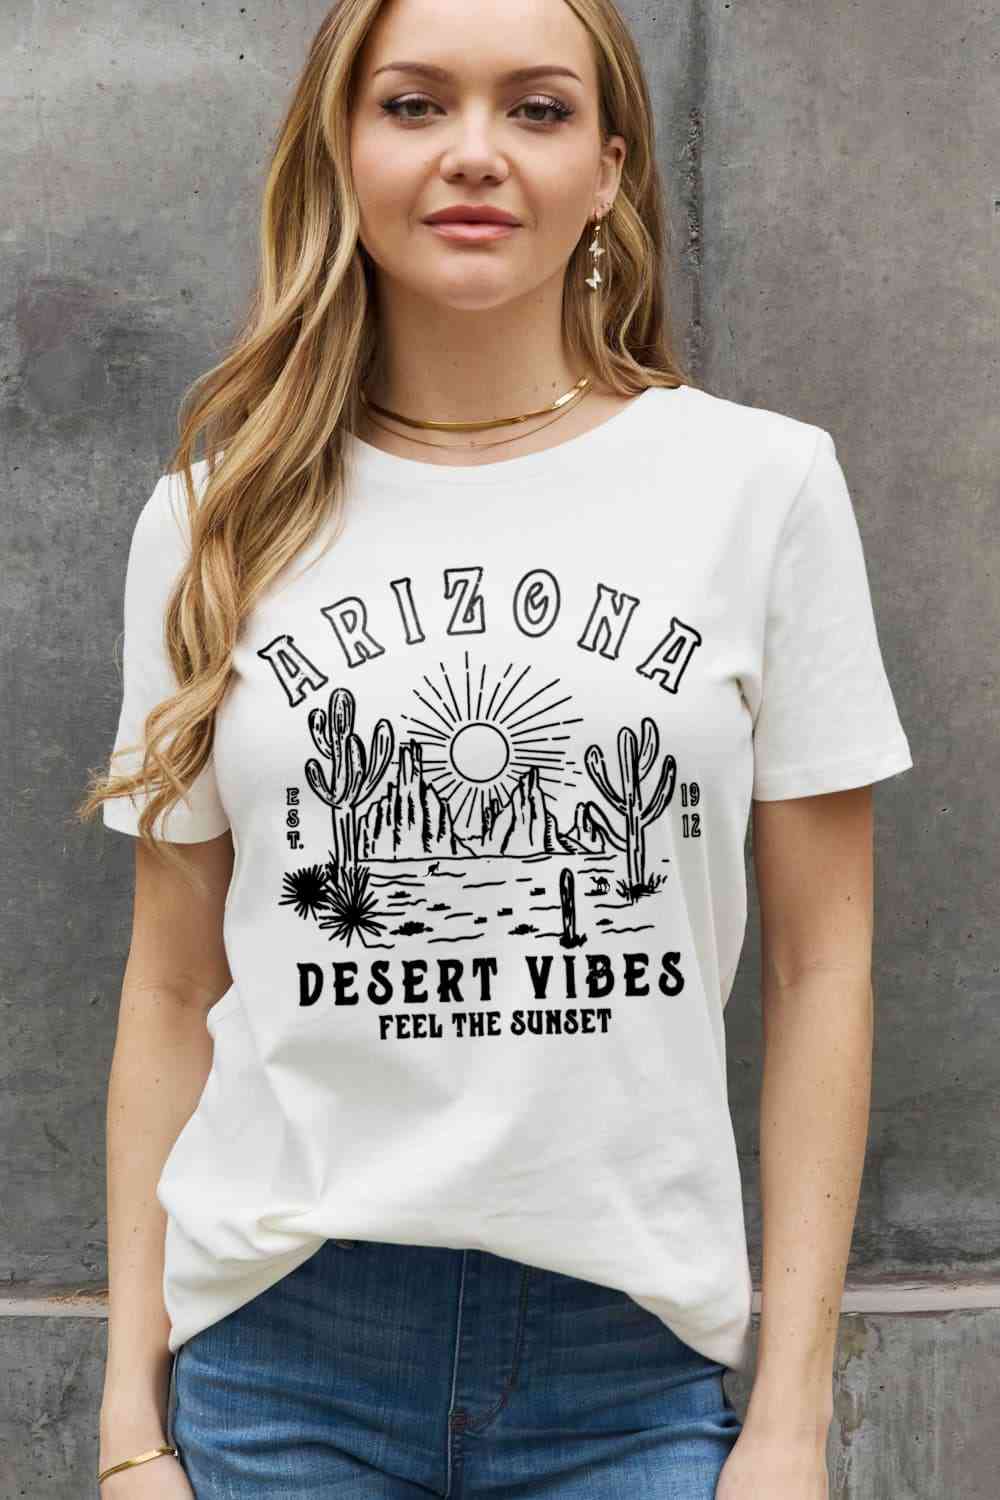 ARIZONA DESERT VIBES FEEL THE SUNSET Graphic Cotton Tee - T-Shirts - Shirts & Tops - 10 - 2024